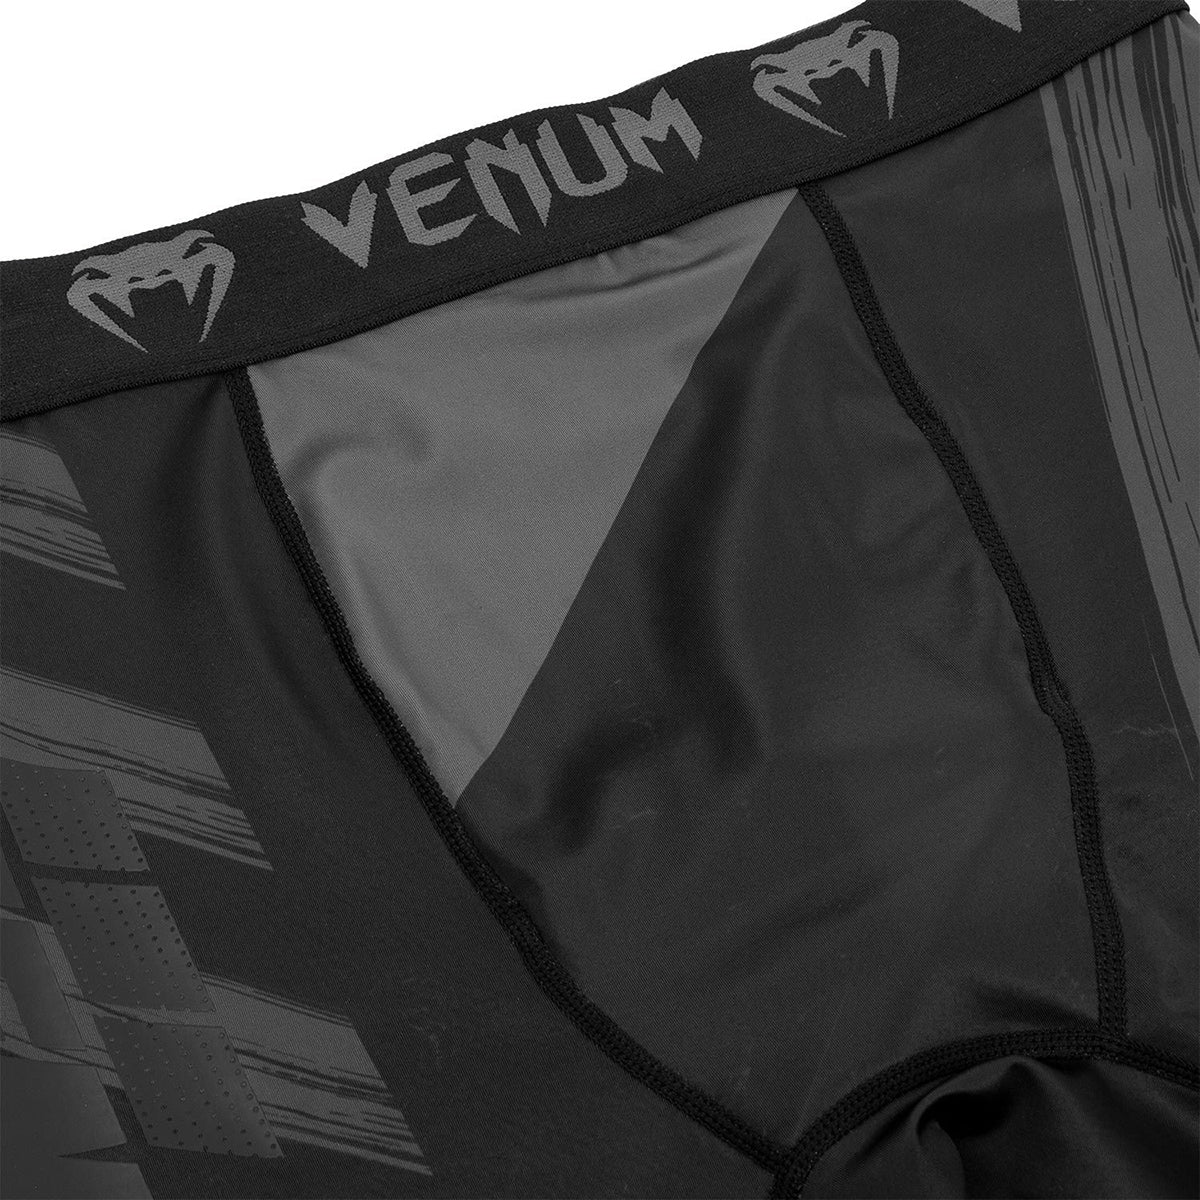 Venum AMRAP Compression Shorts - Black/Gray Venum